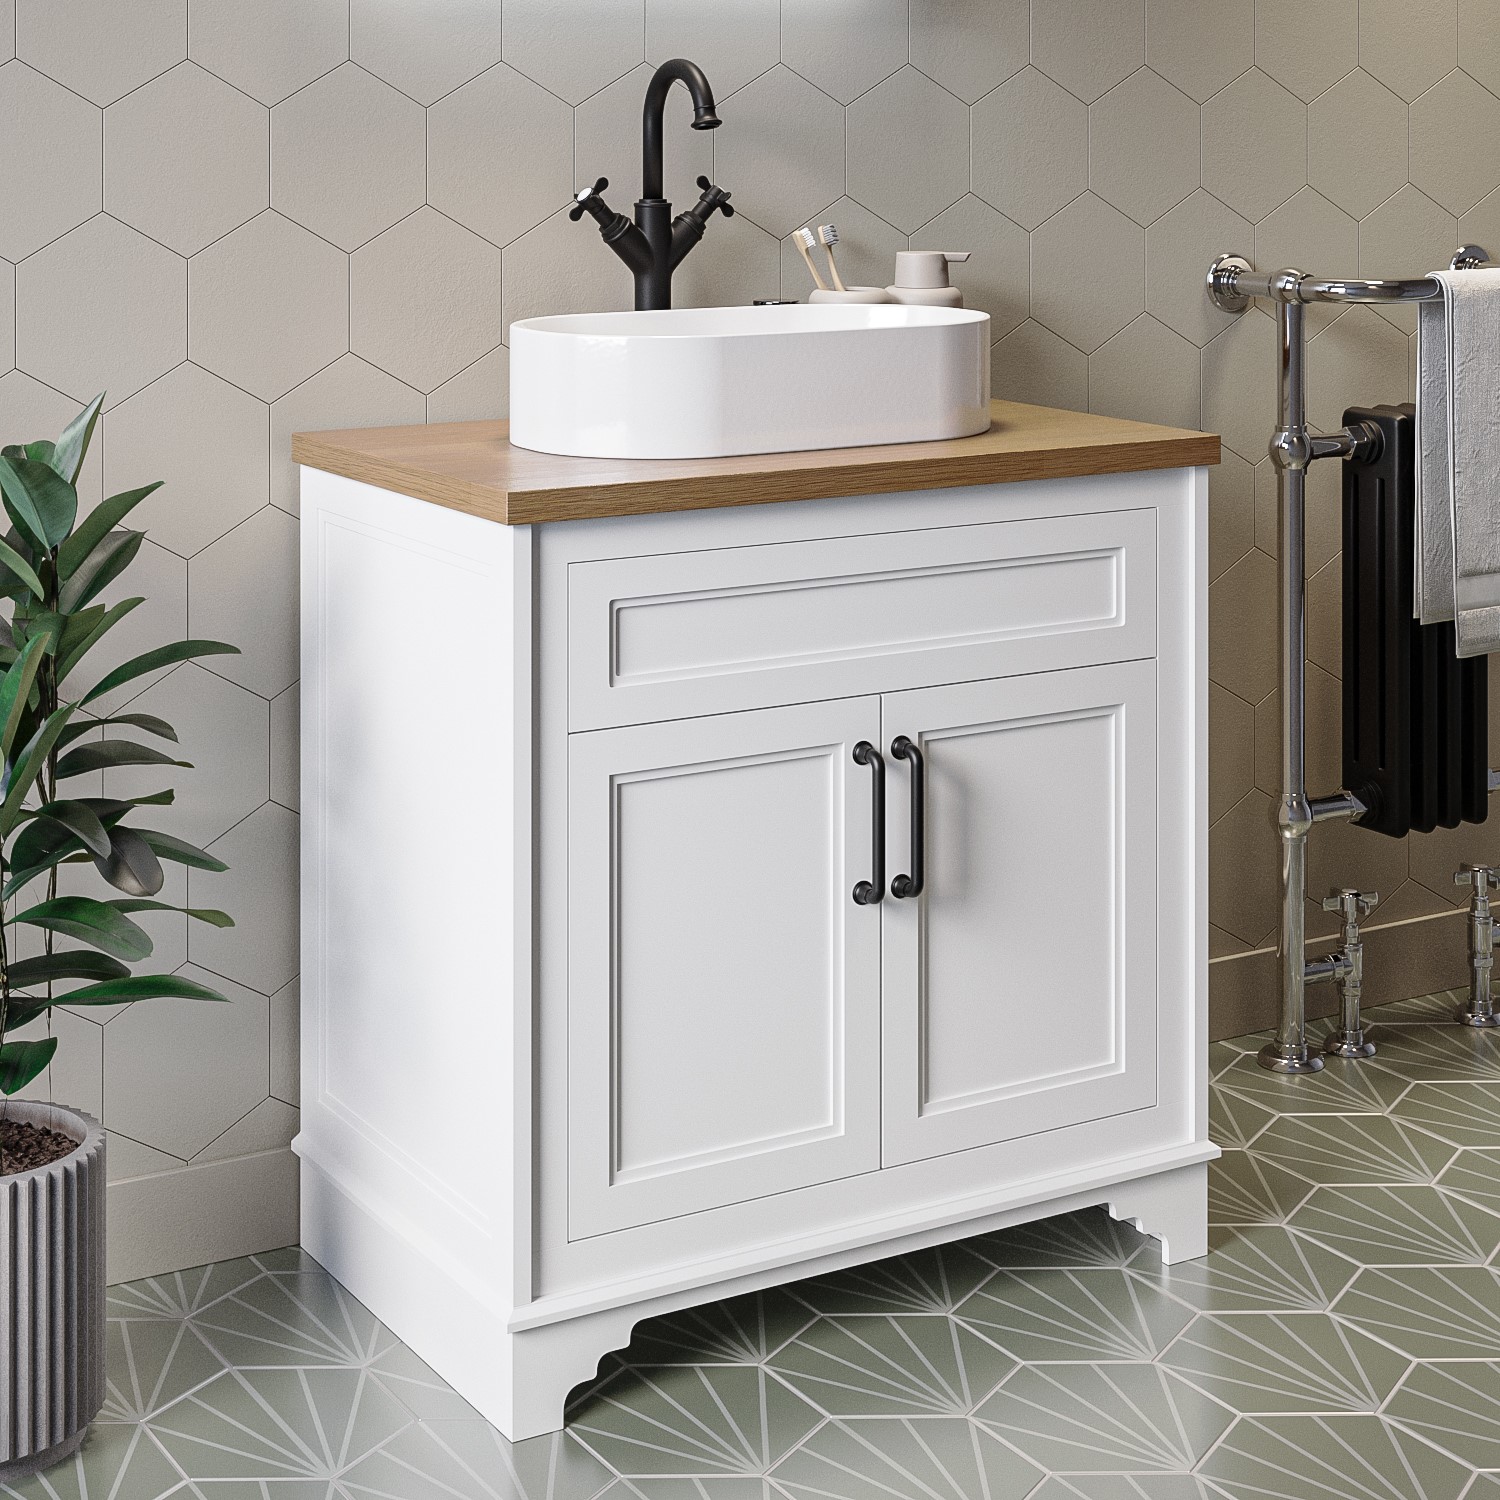 800mm White Freestanding Countertop, Bathroom Vanity With Countertop Basin